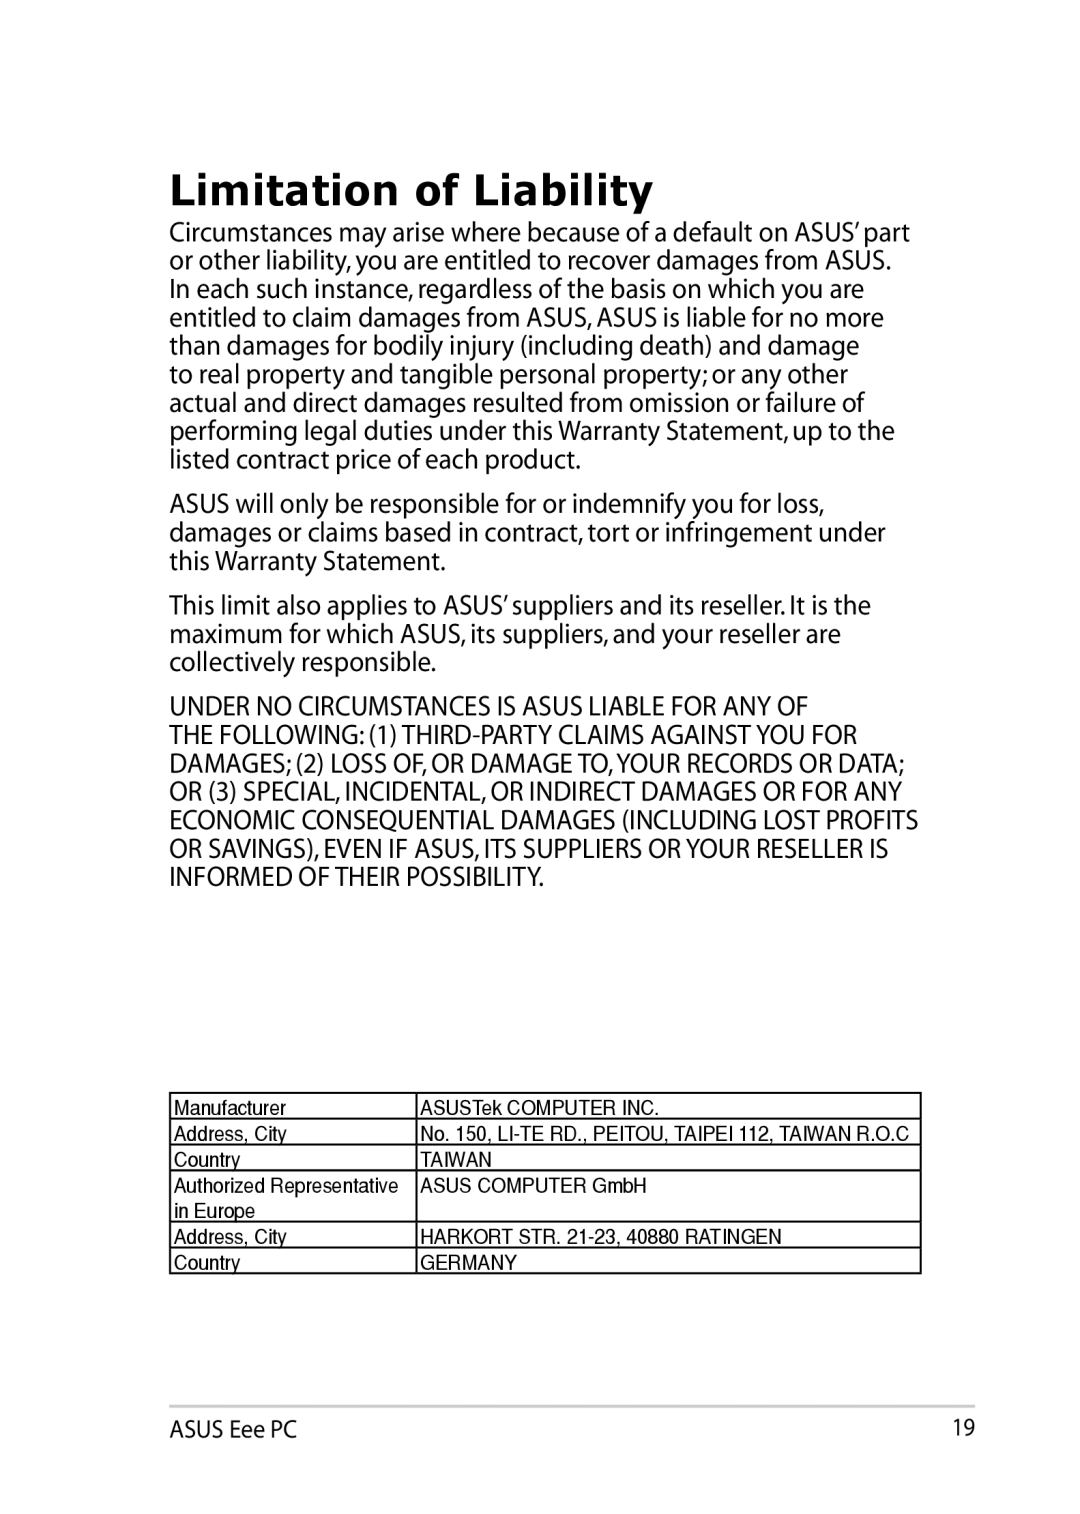 Asus 900AX user manual Limitation of Liability, Authorized Representative 